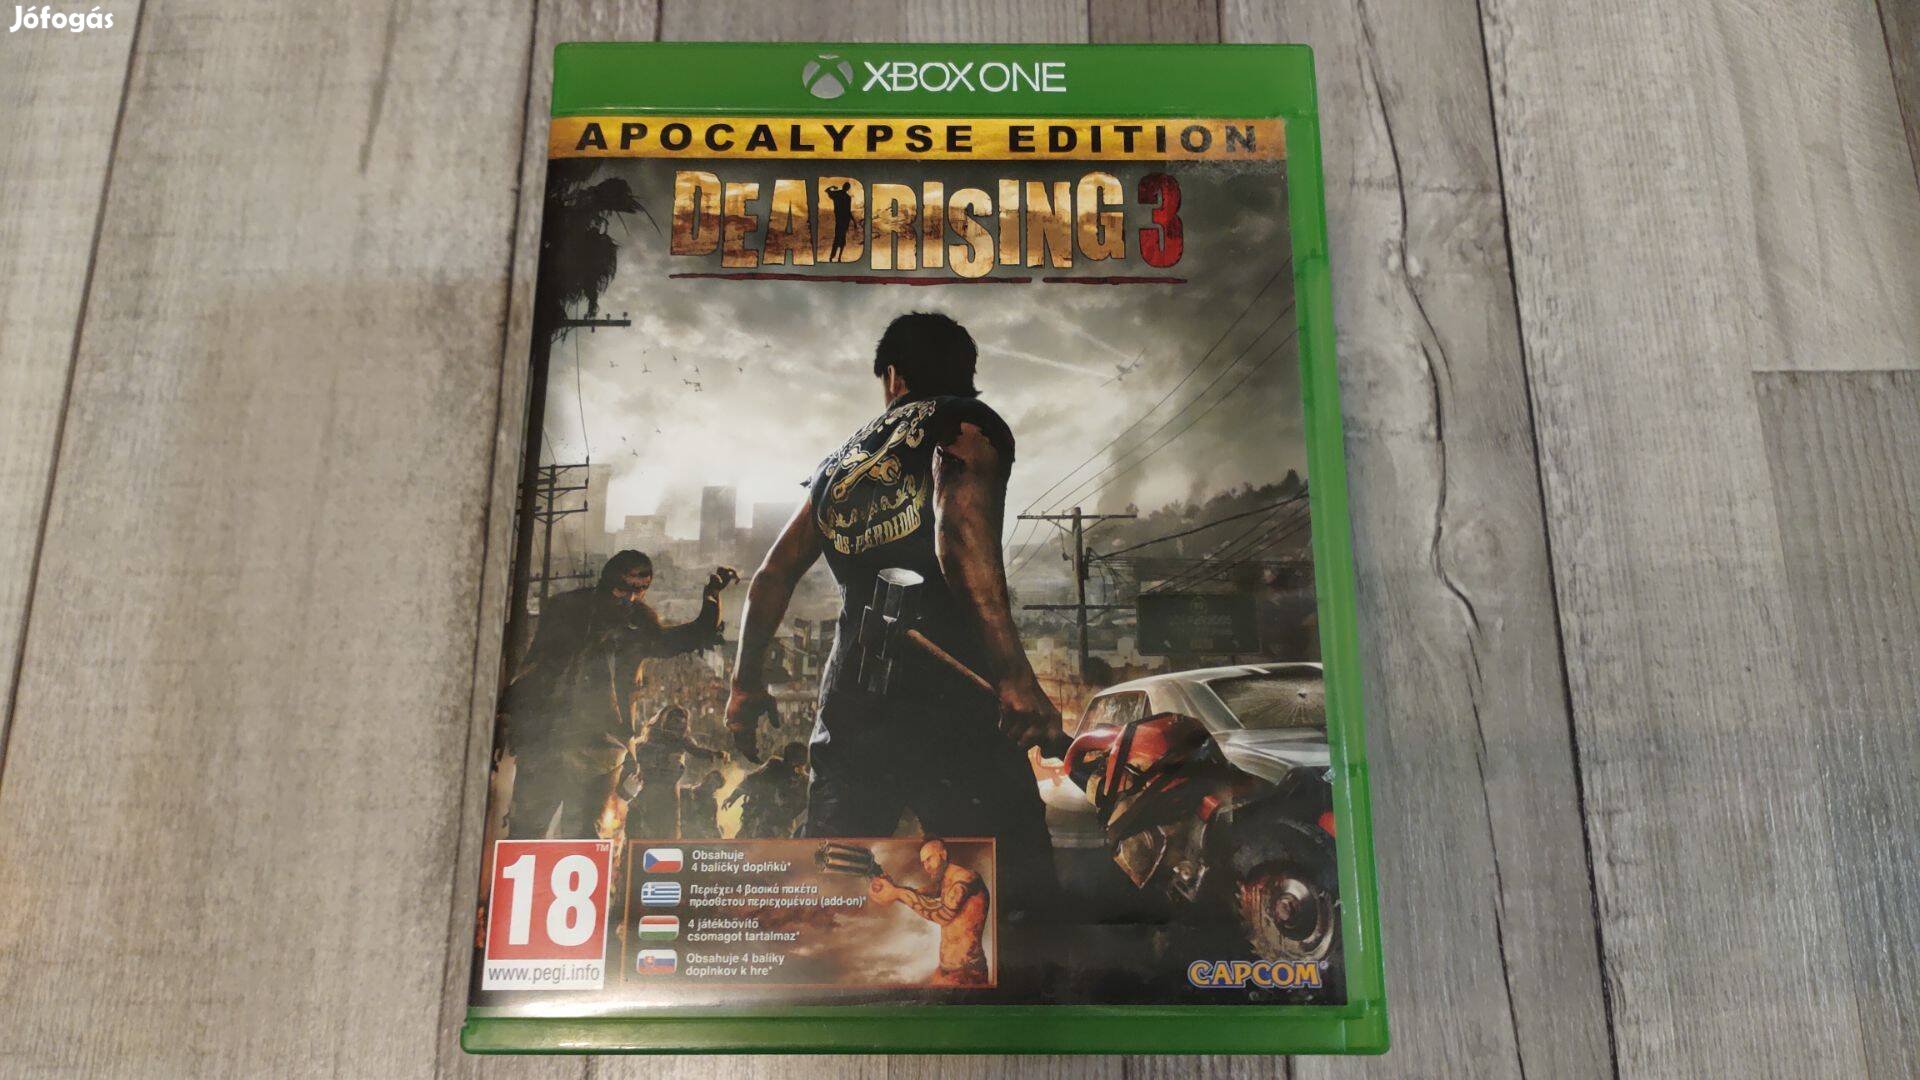 Xbox One(S/X)-Series X : Dead Rising 3 Apocalypse Edition